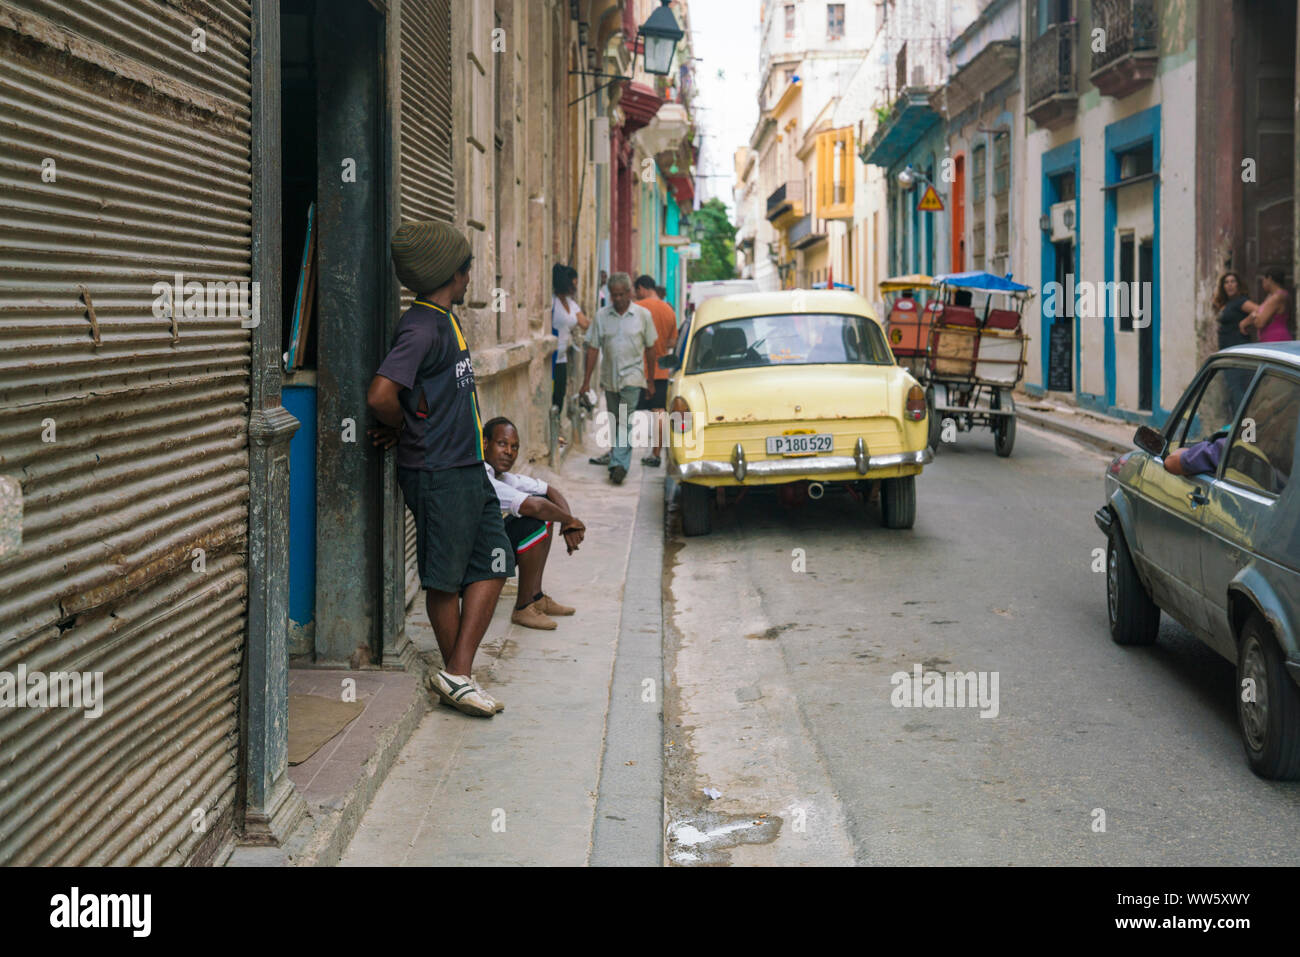 Street scene in the old town of Havana, Cuba Stock Photo